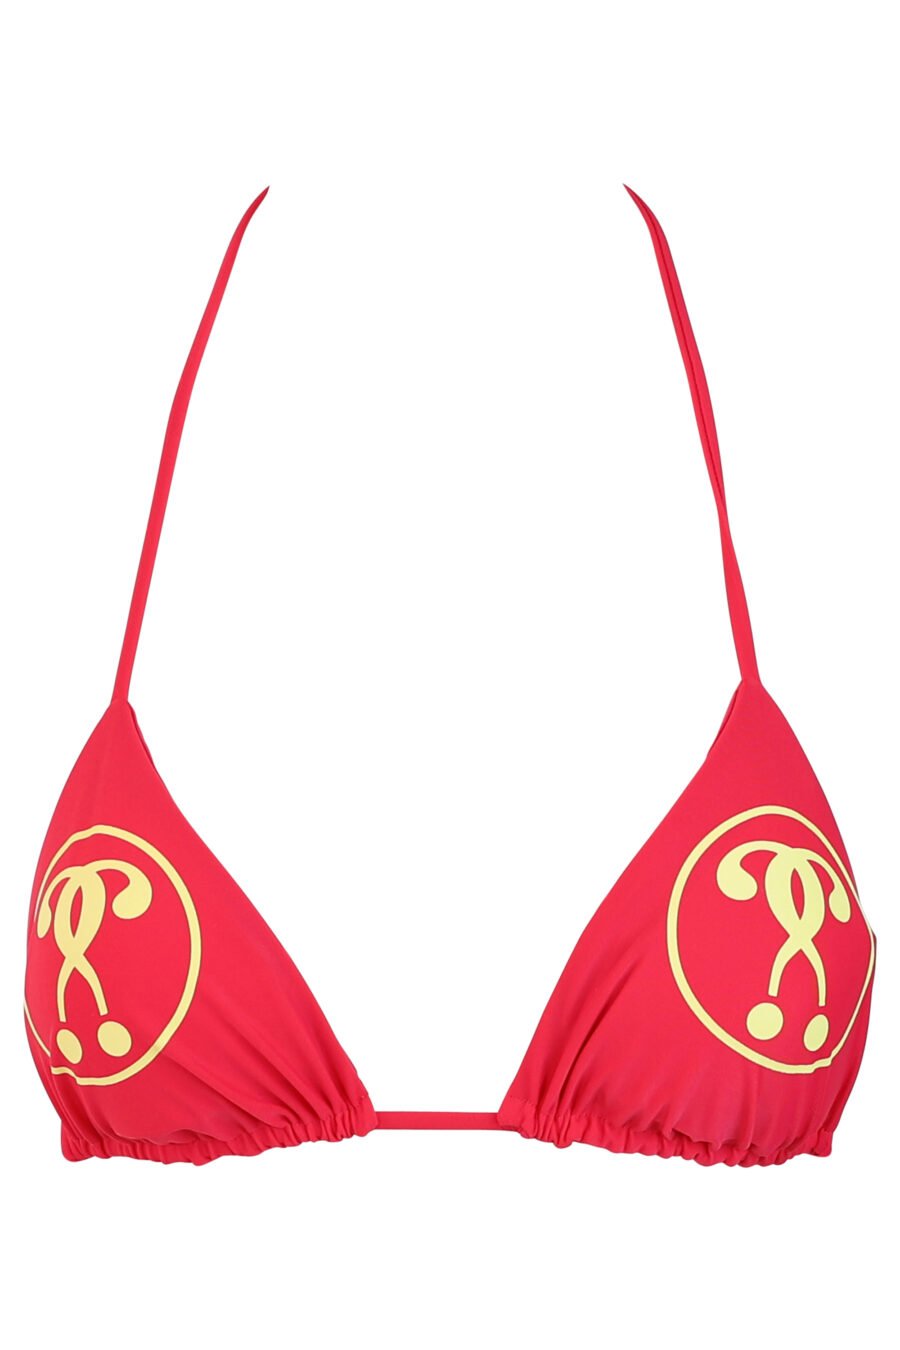 Top de bikini fucsia con logo doble pregunta amarillo - IMG 0678